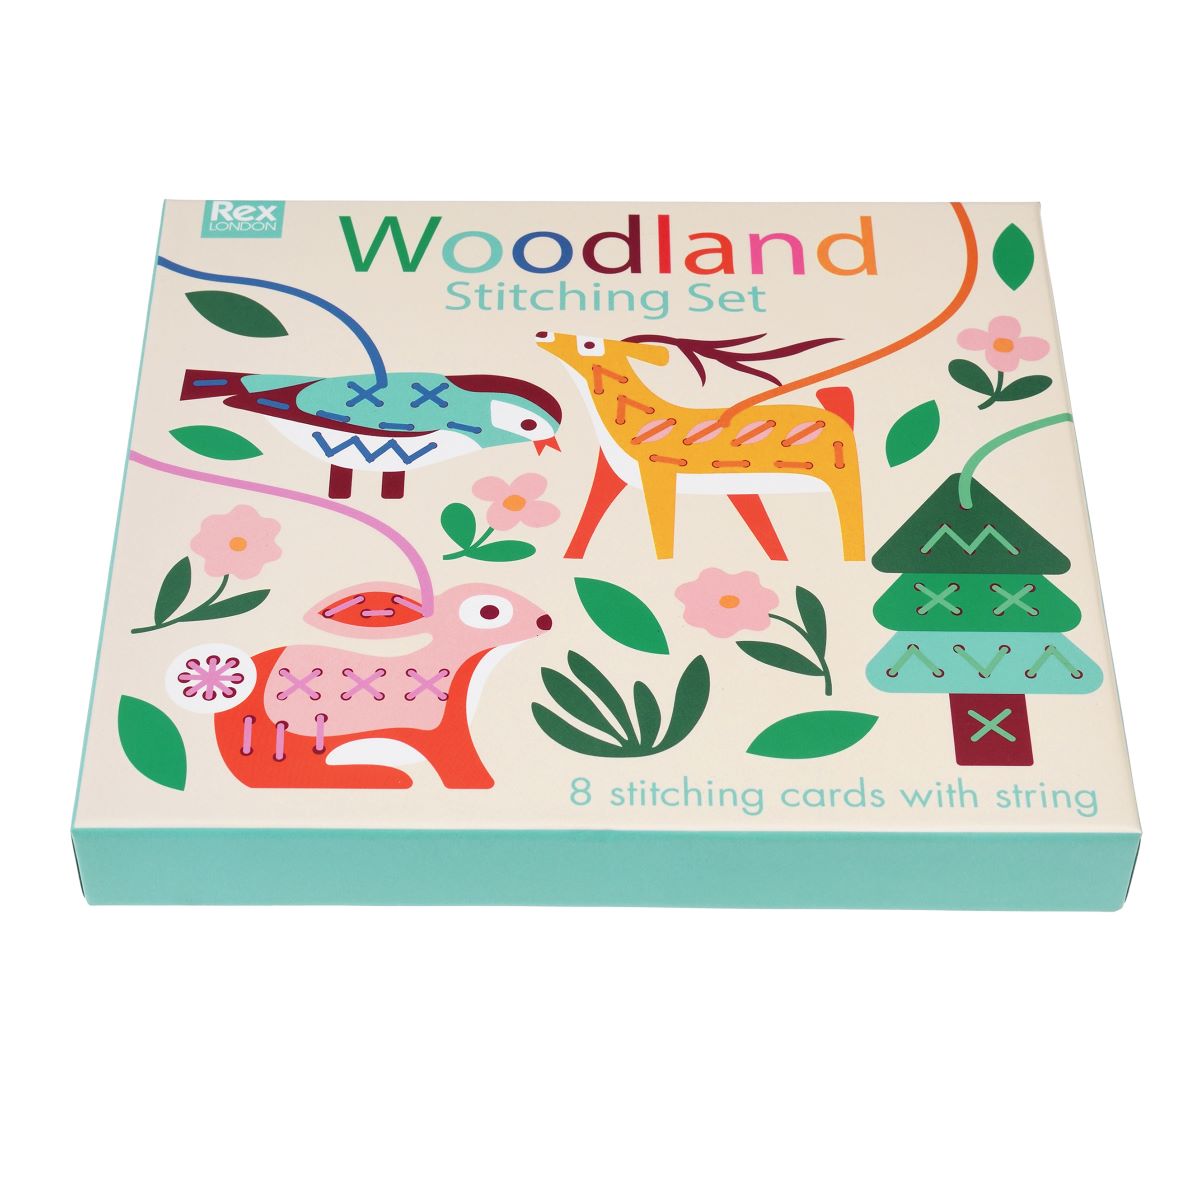 Stitching set - Woodland